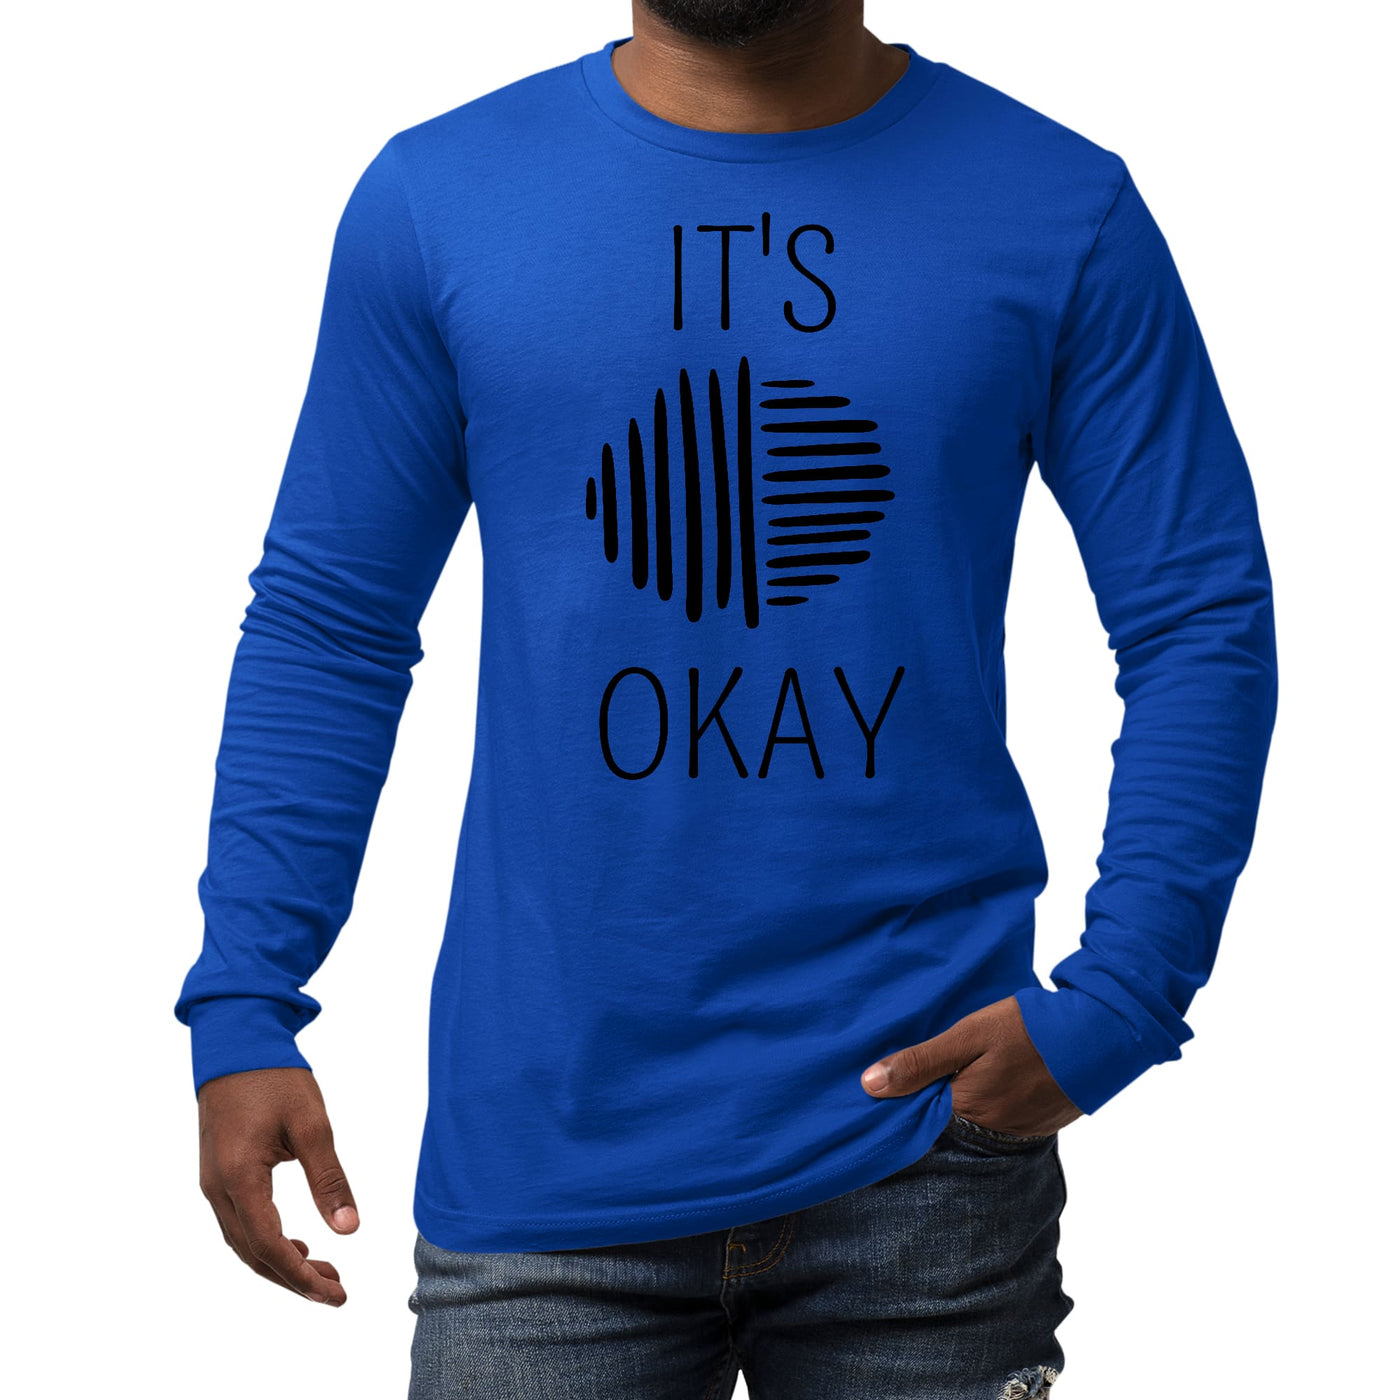 Mens Long Sleeve Graphic T-shirt - Say It Soul Its Okay Black Line - Unisex